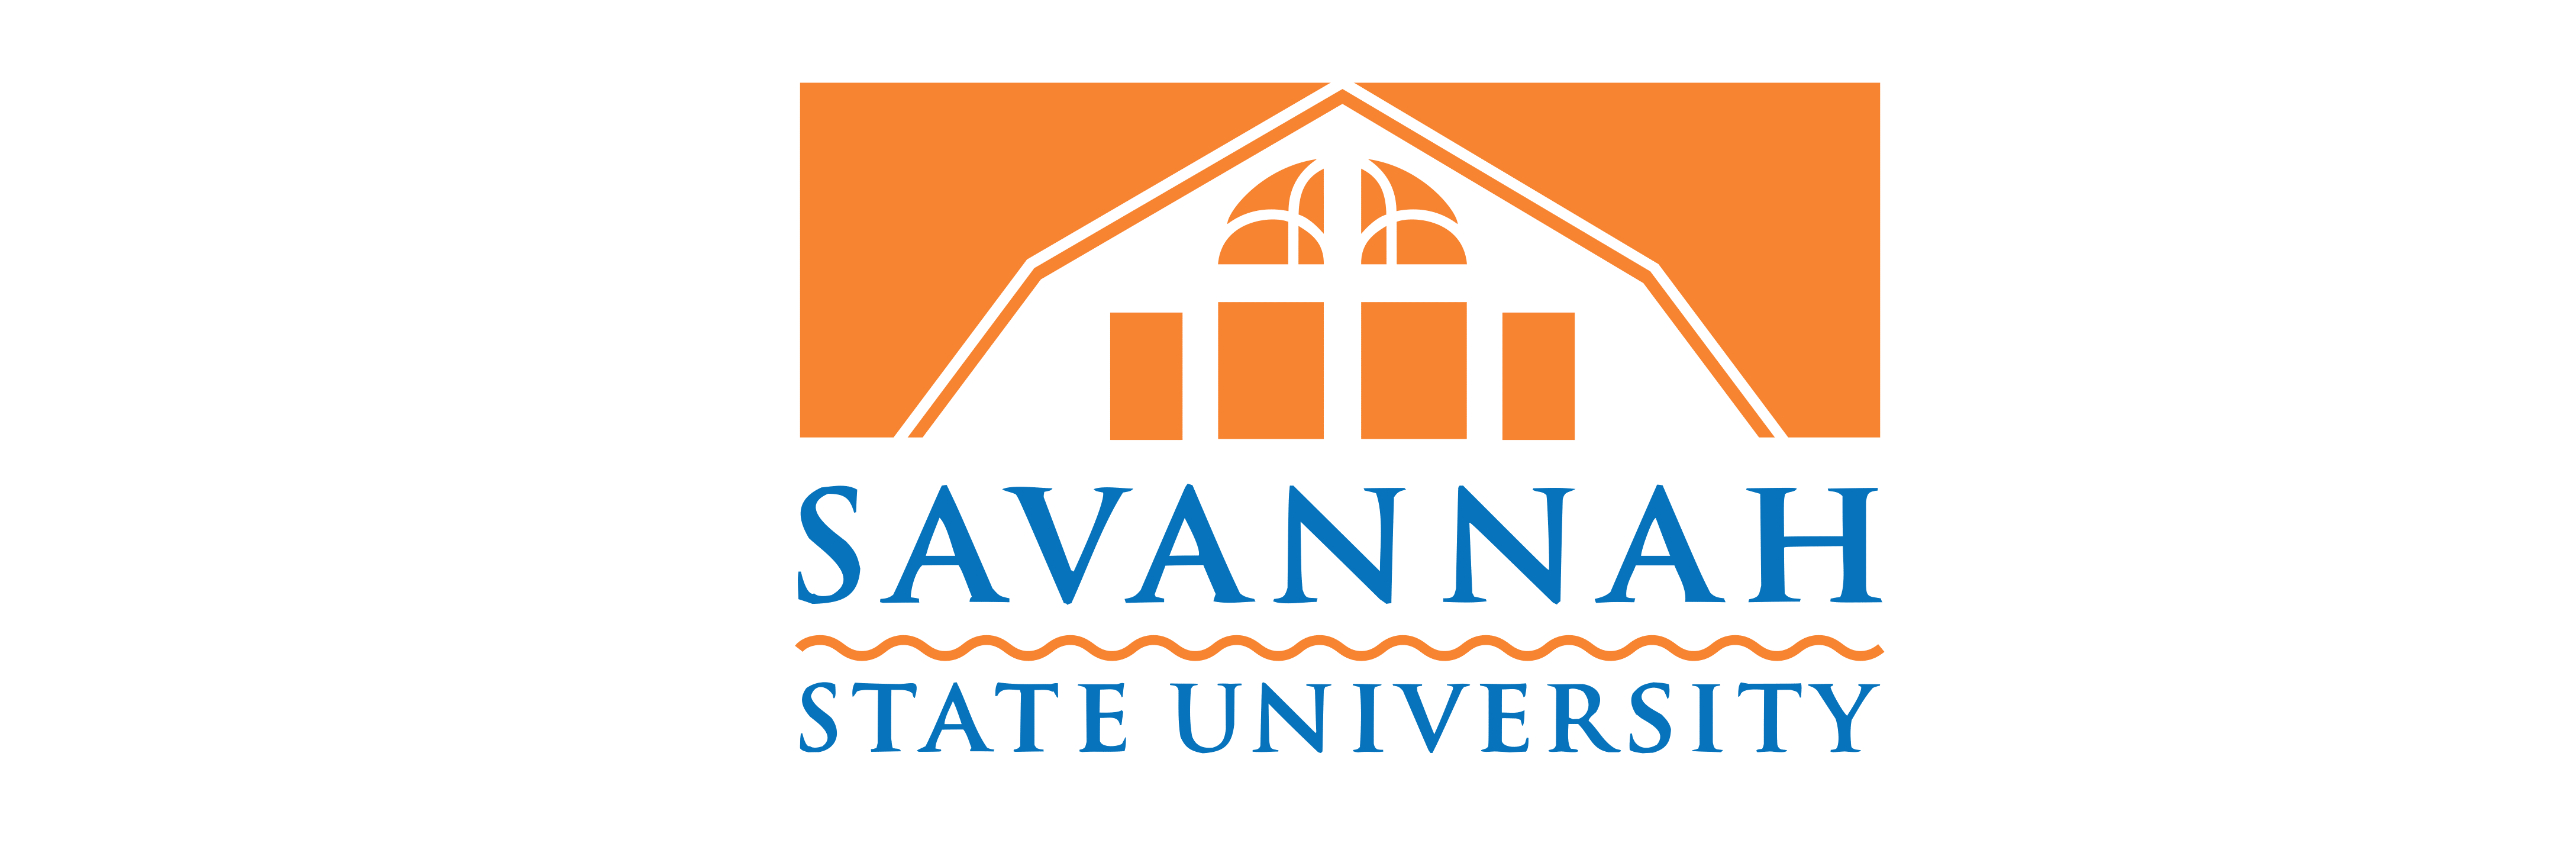 USG Chancellor Sonny Perdue Names Cynthia Alexander as Interim President at Savannah State University